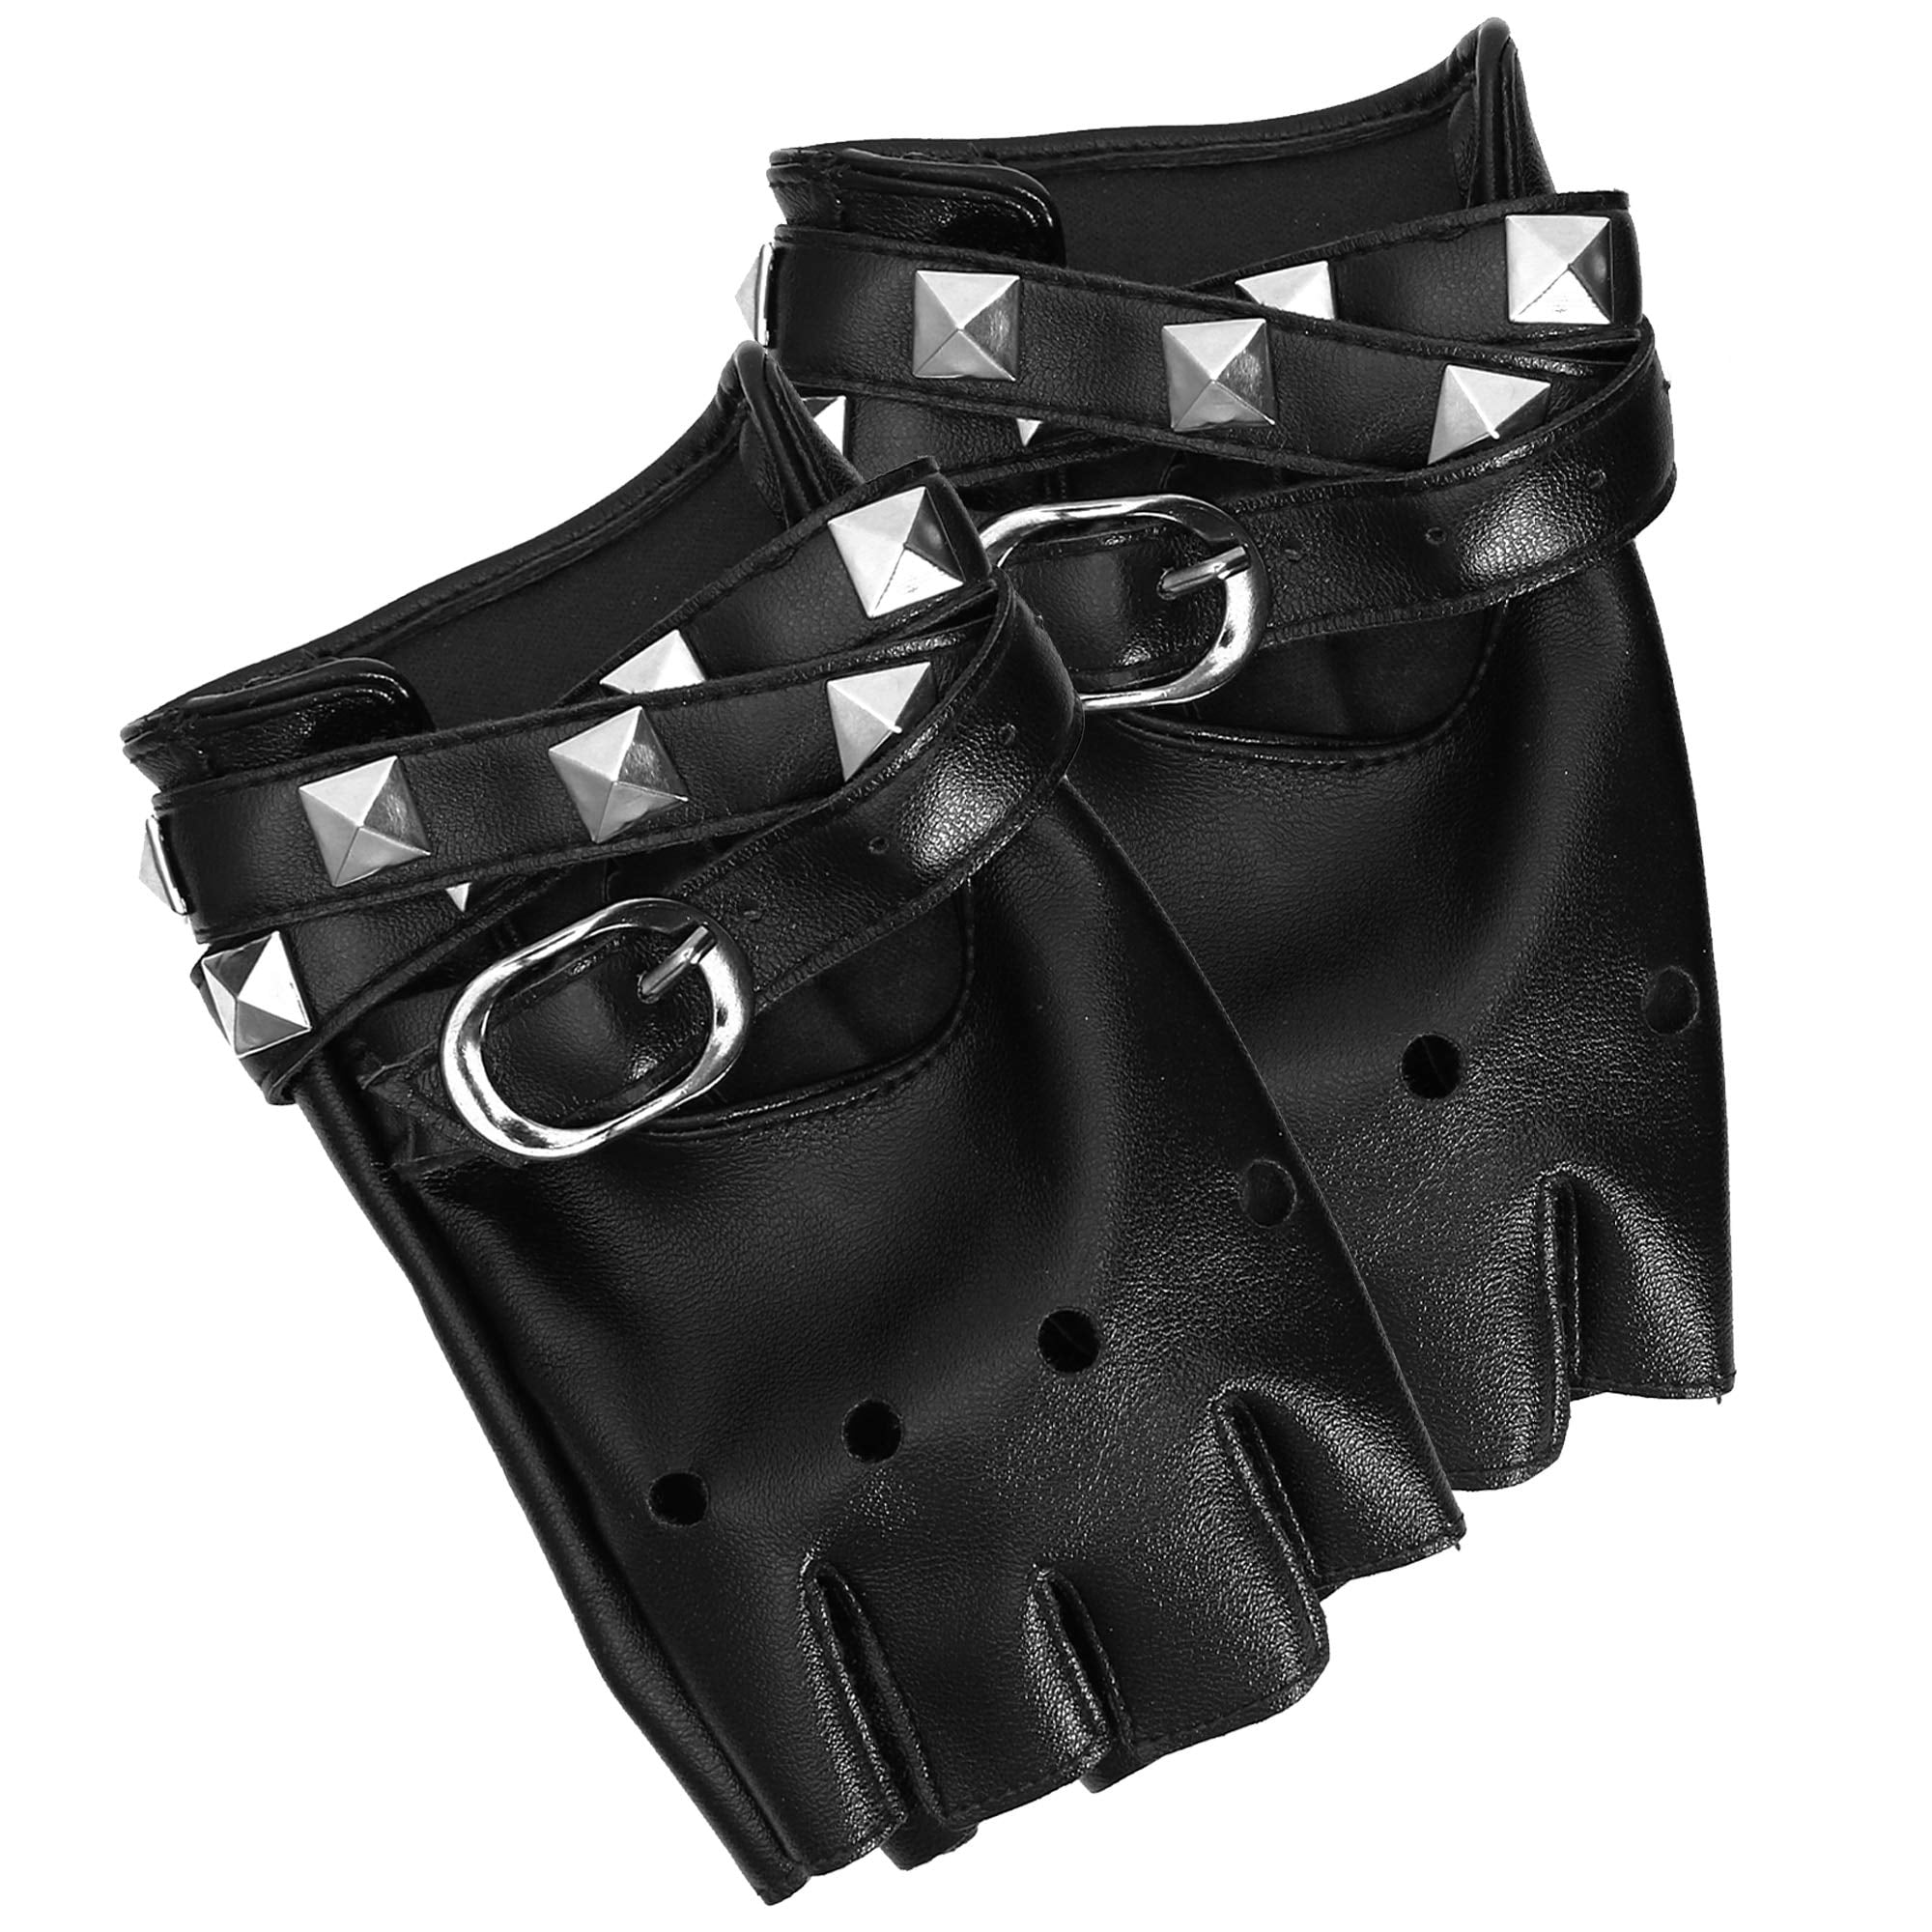 Skeleteen Fingerless Faux Leather Gloves - Black Biker Punk Gloves